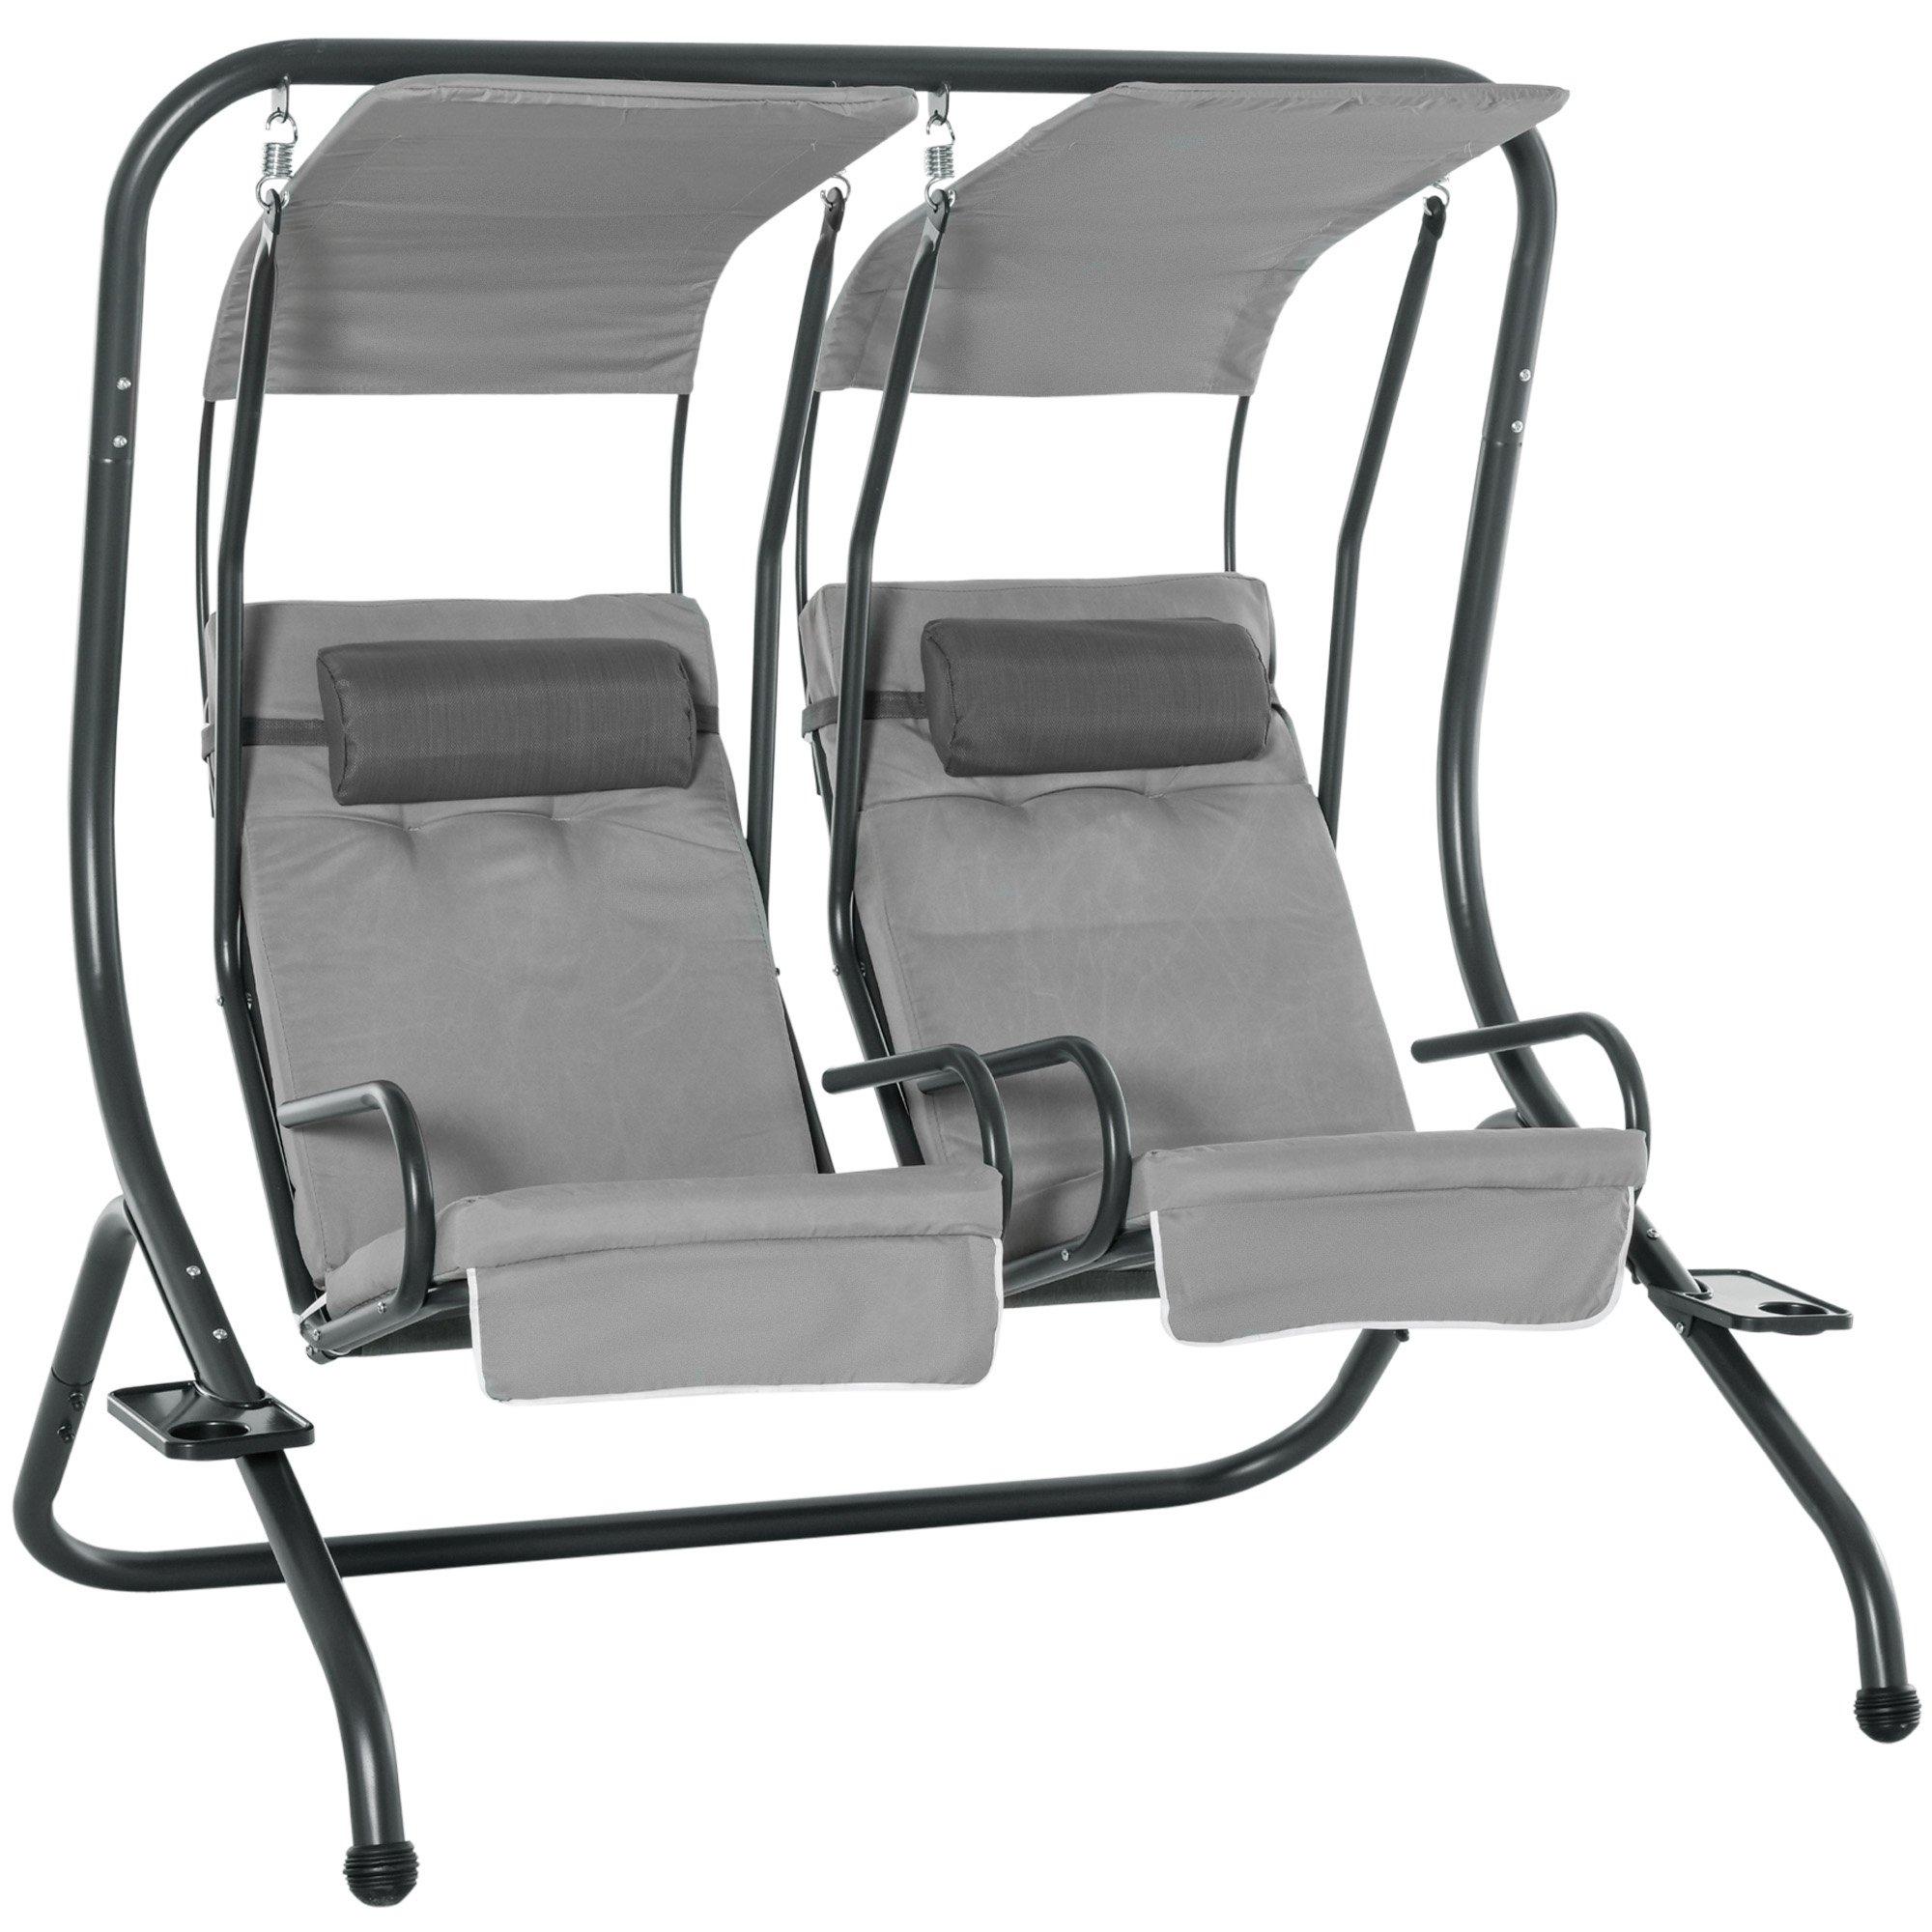 2 Seater Garden Metal Swing Seat Patio Swinging Chair Hammock Canopy